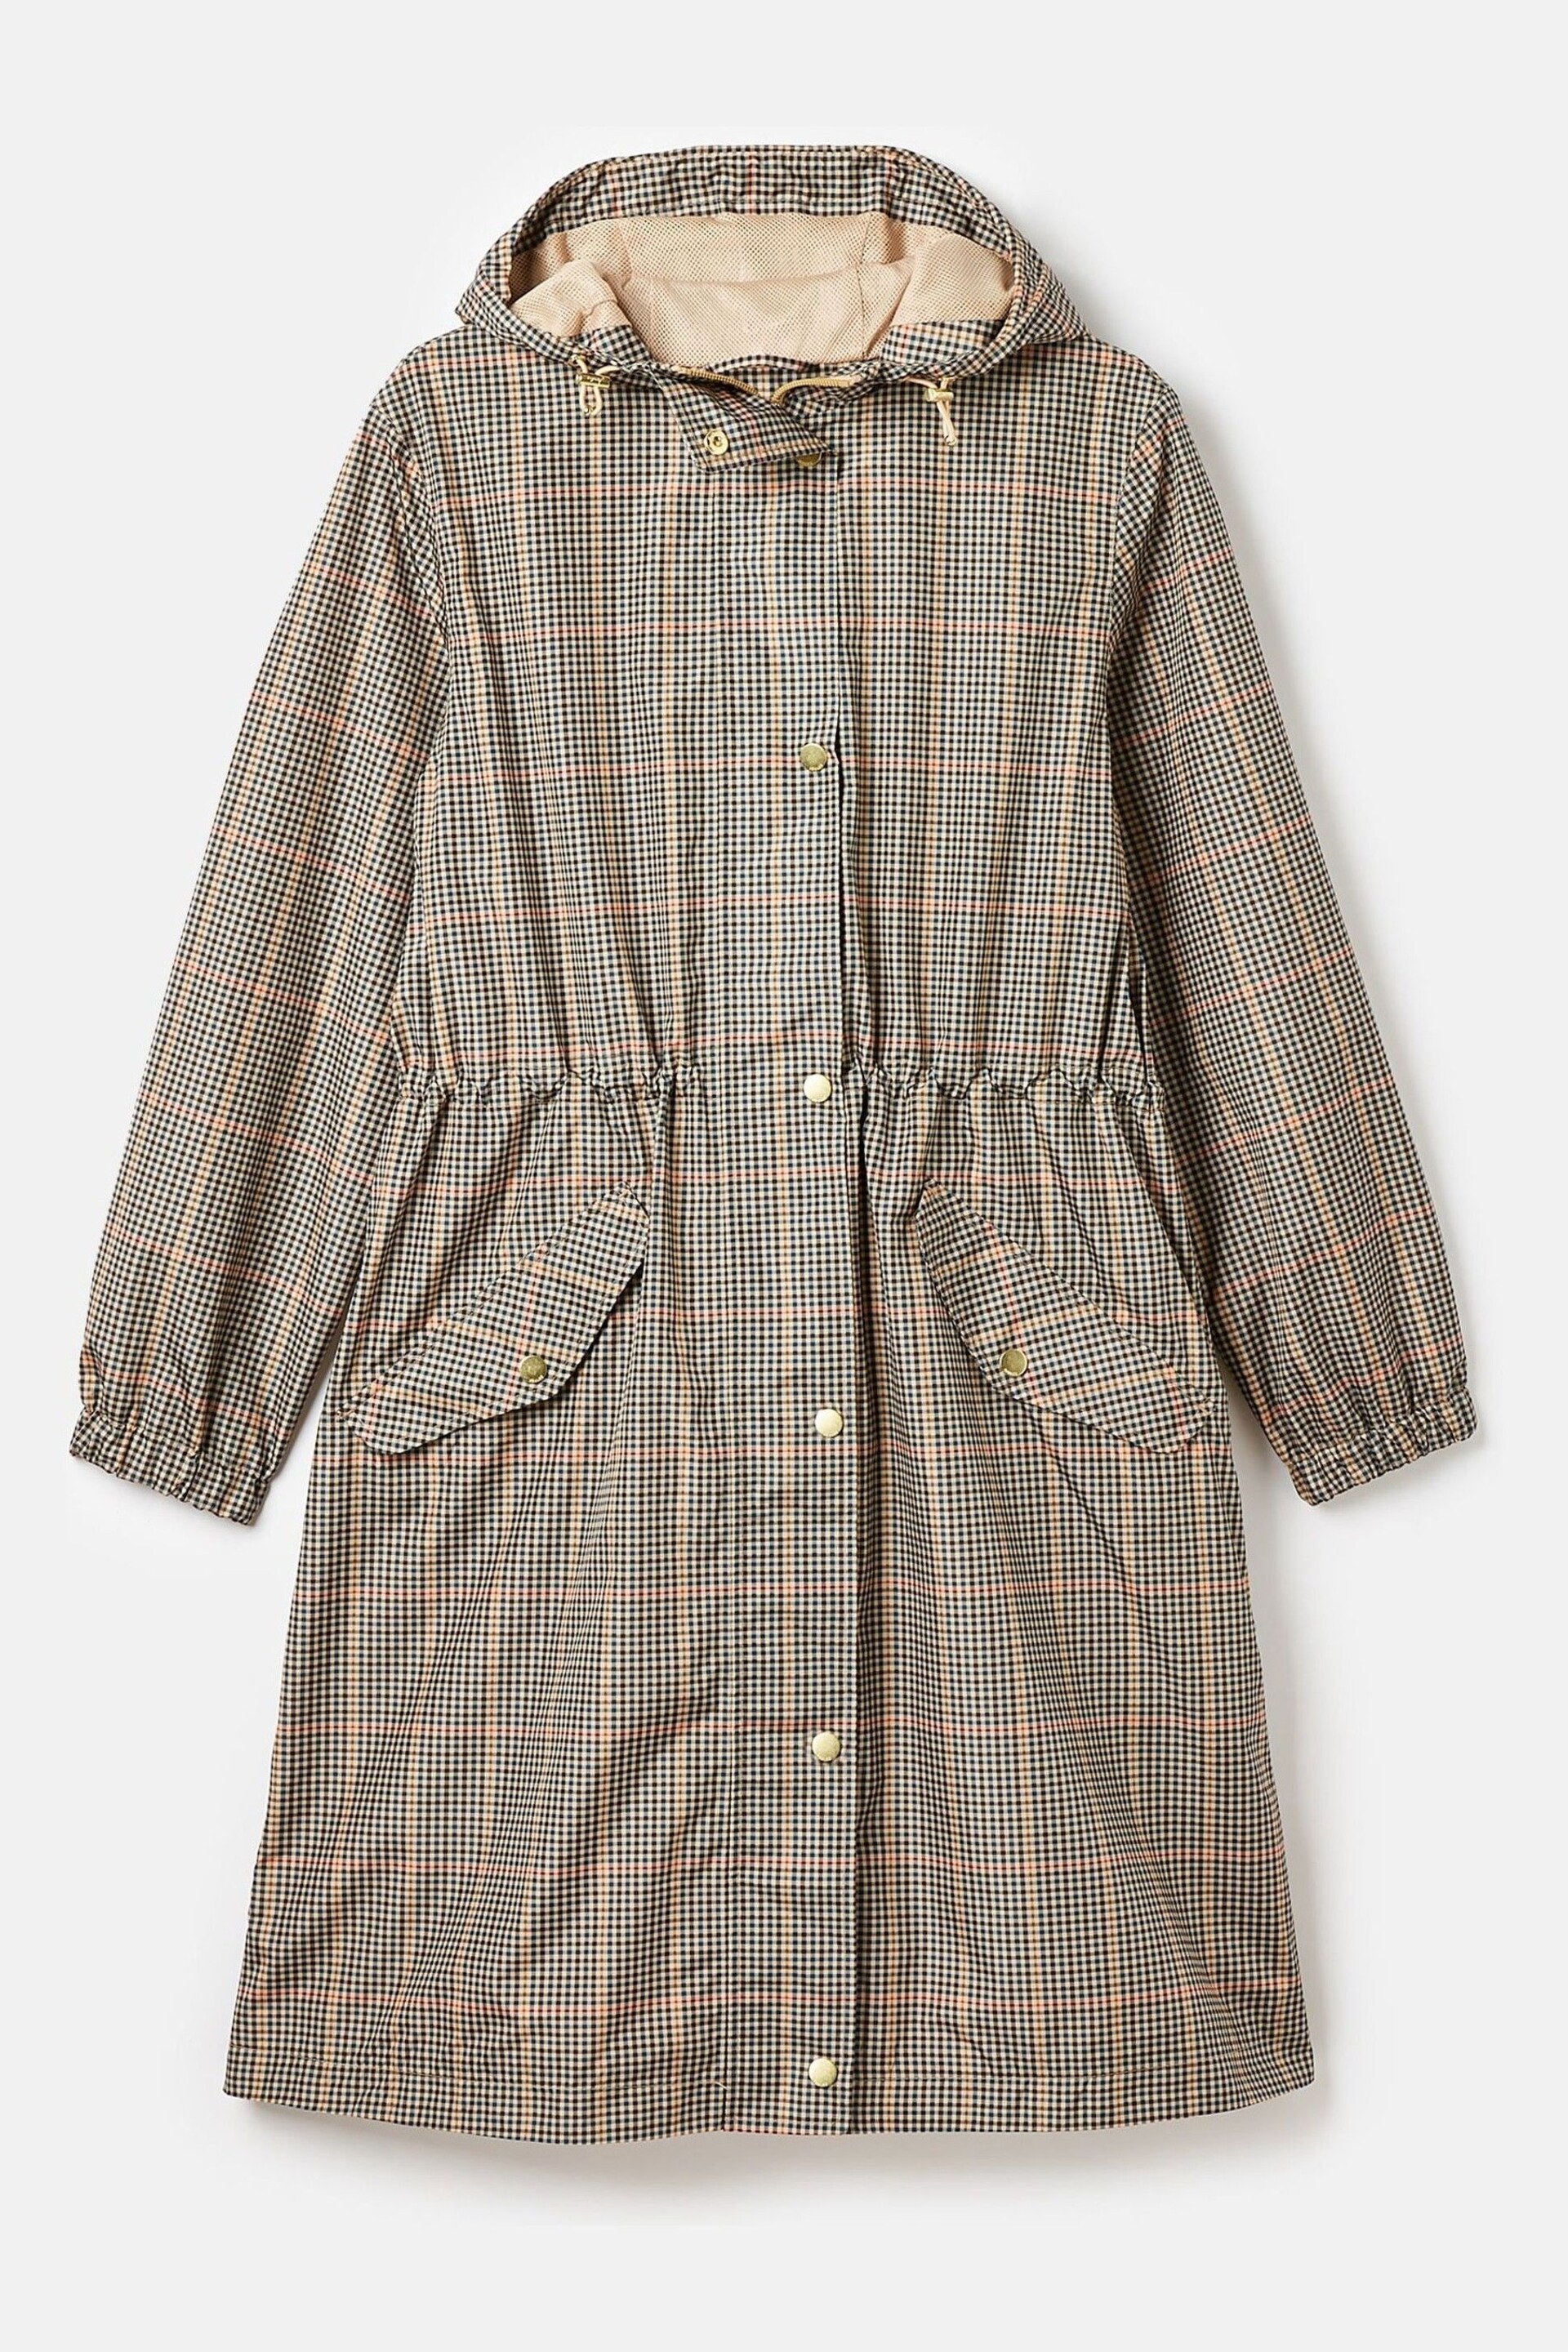 Joules Holkham Brown Waterproof Packable Raincoat With Hood - Image 9 of 9